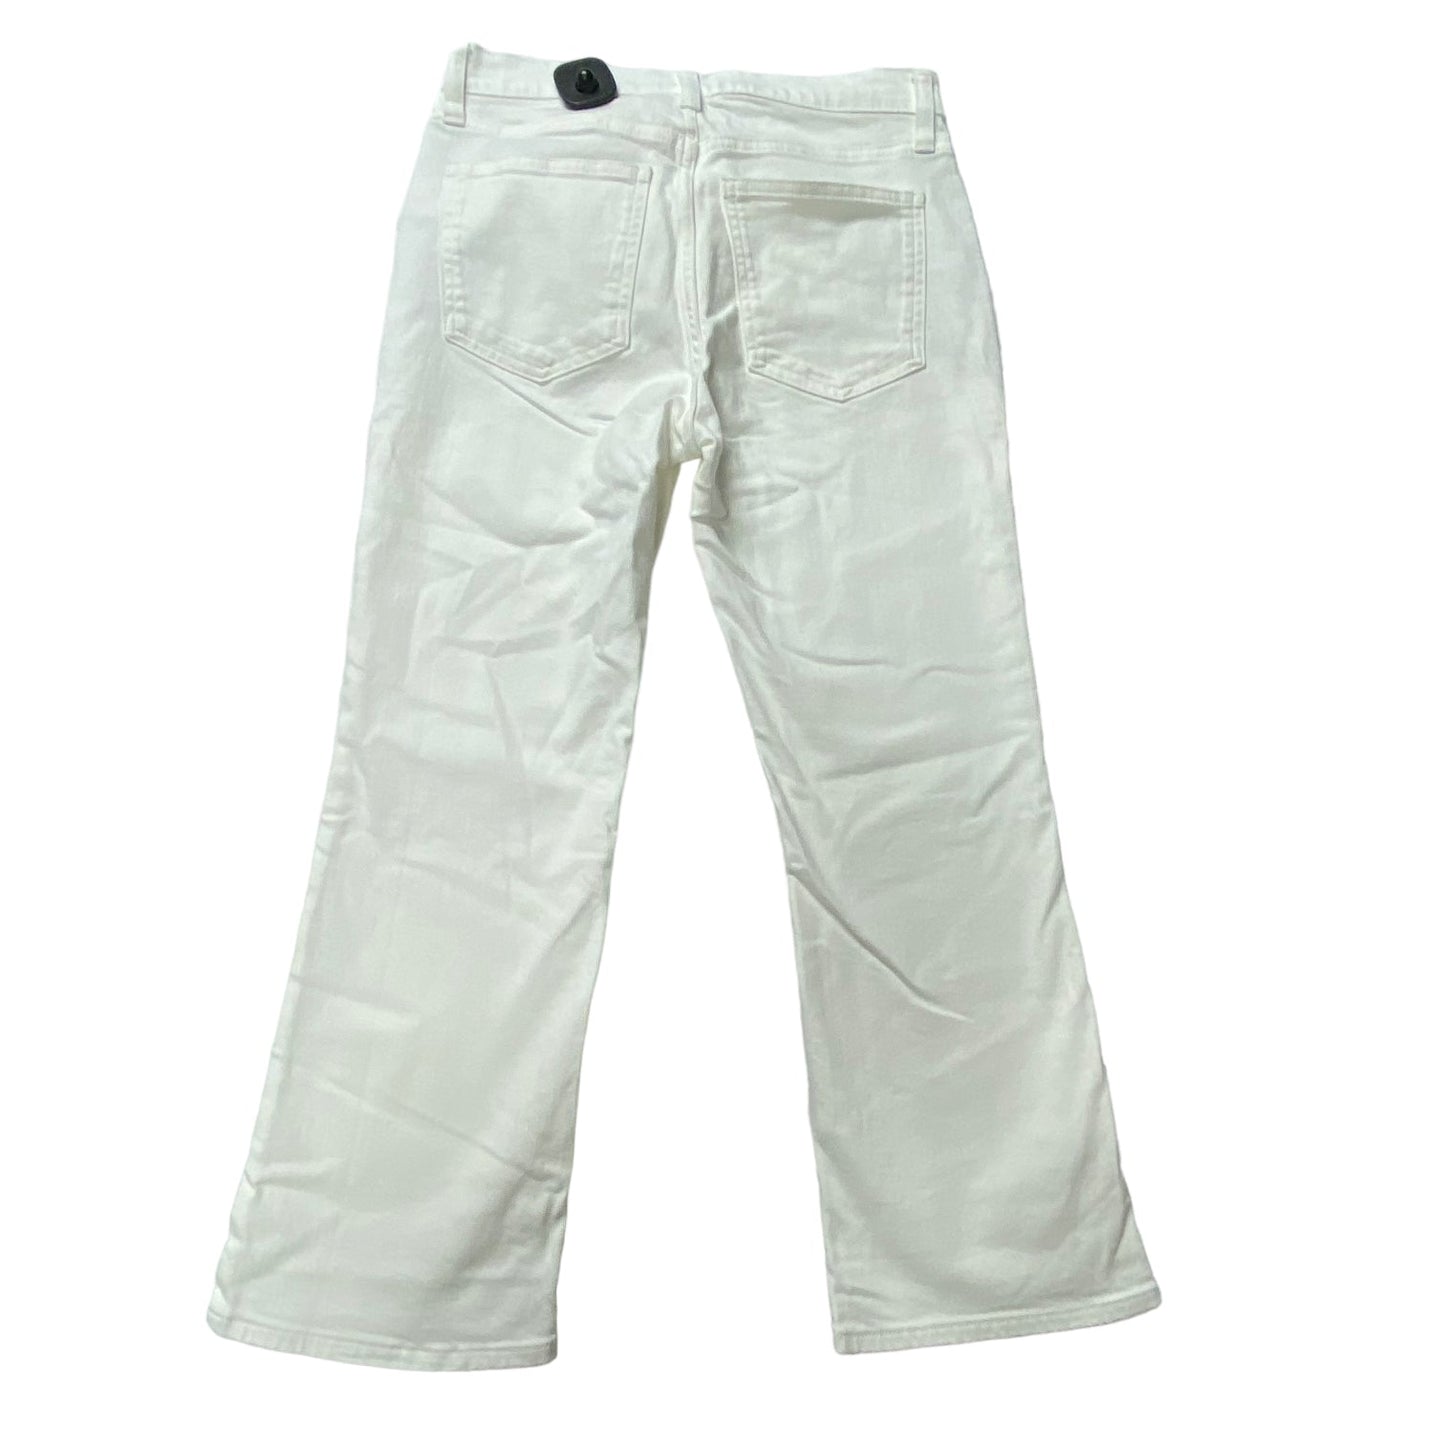 White Jeans Cropped Gap, Size 4